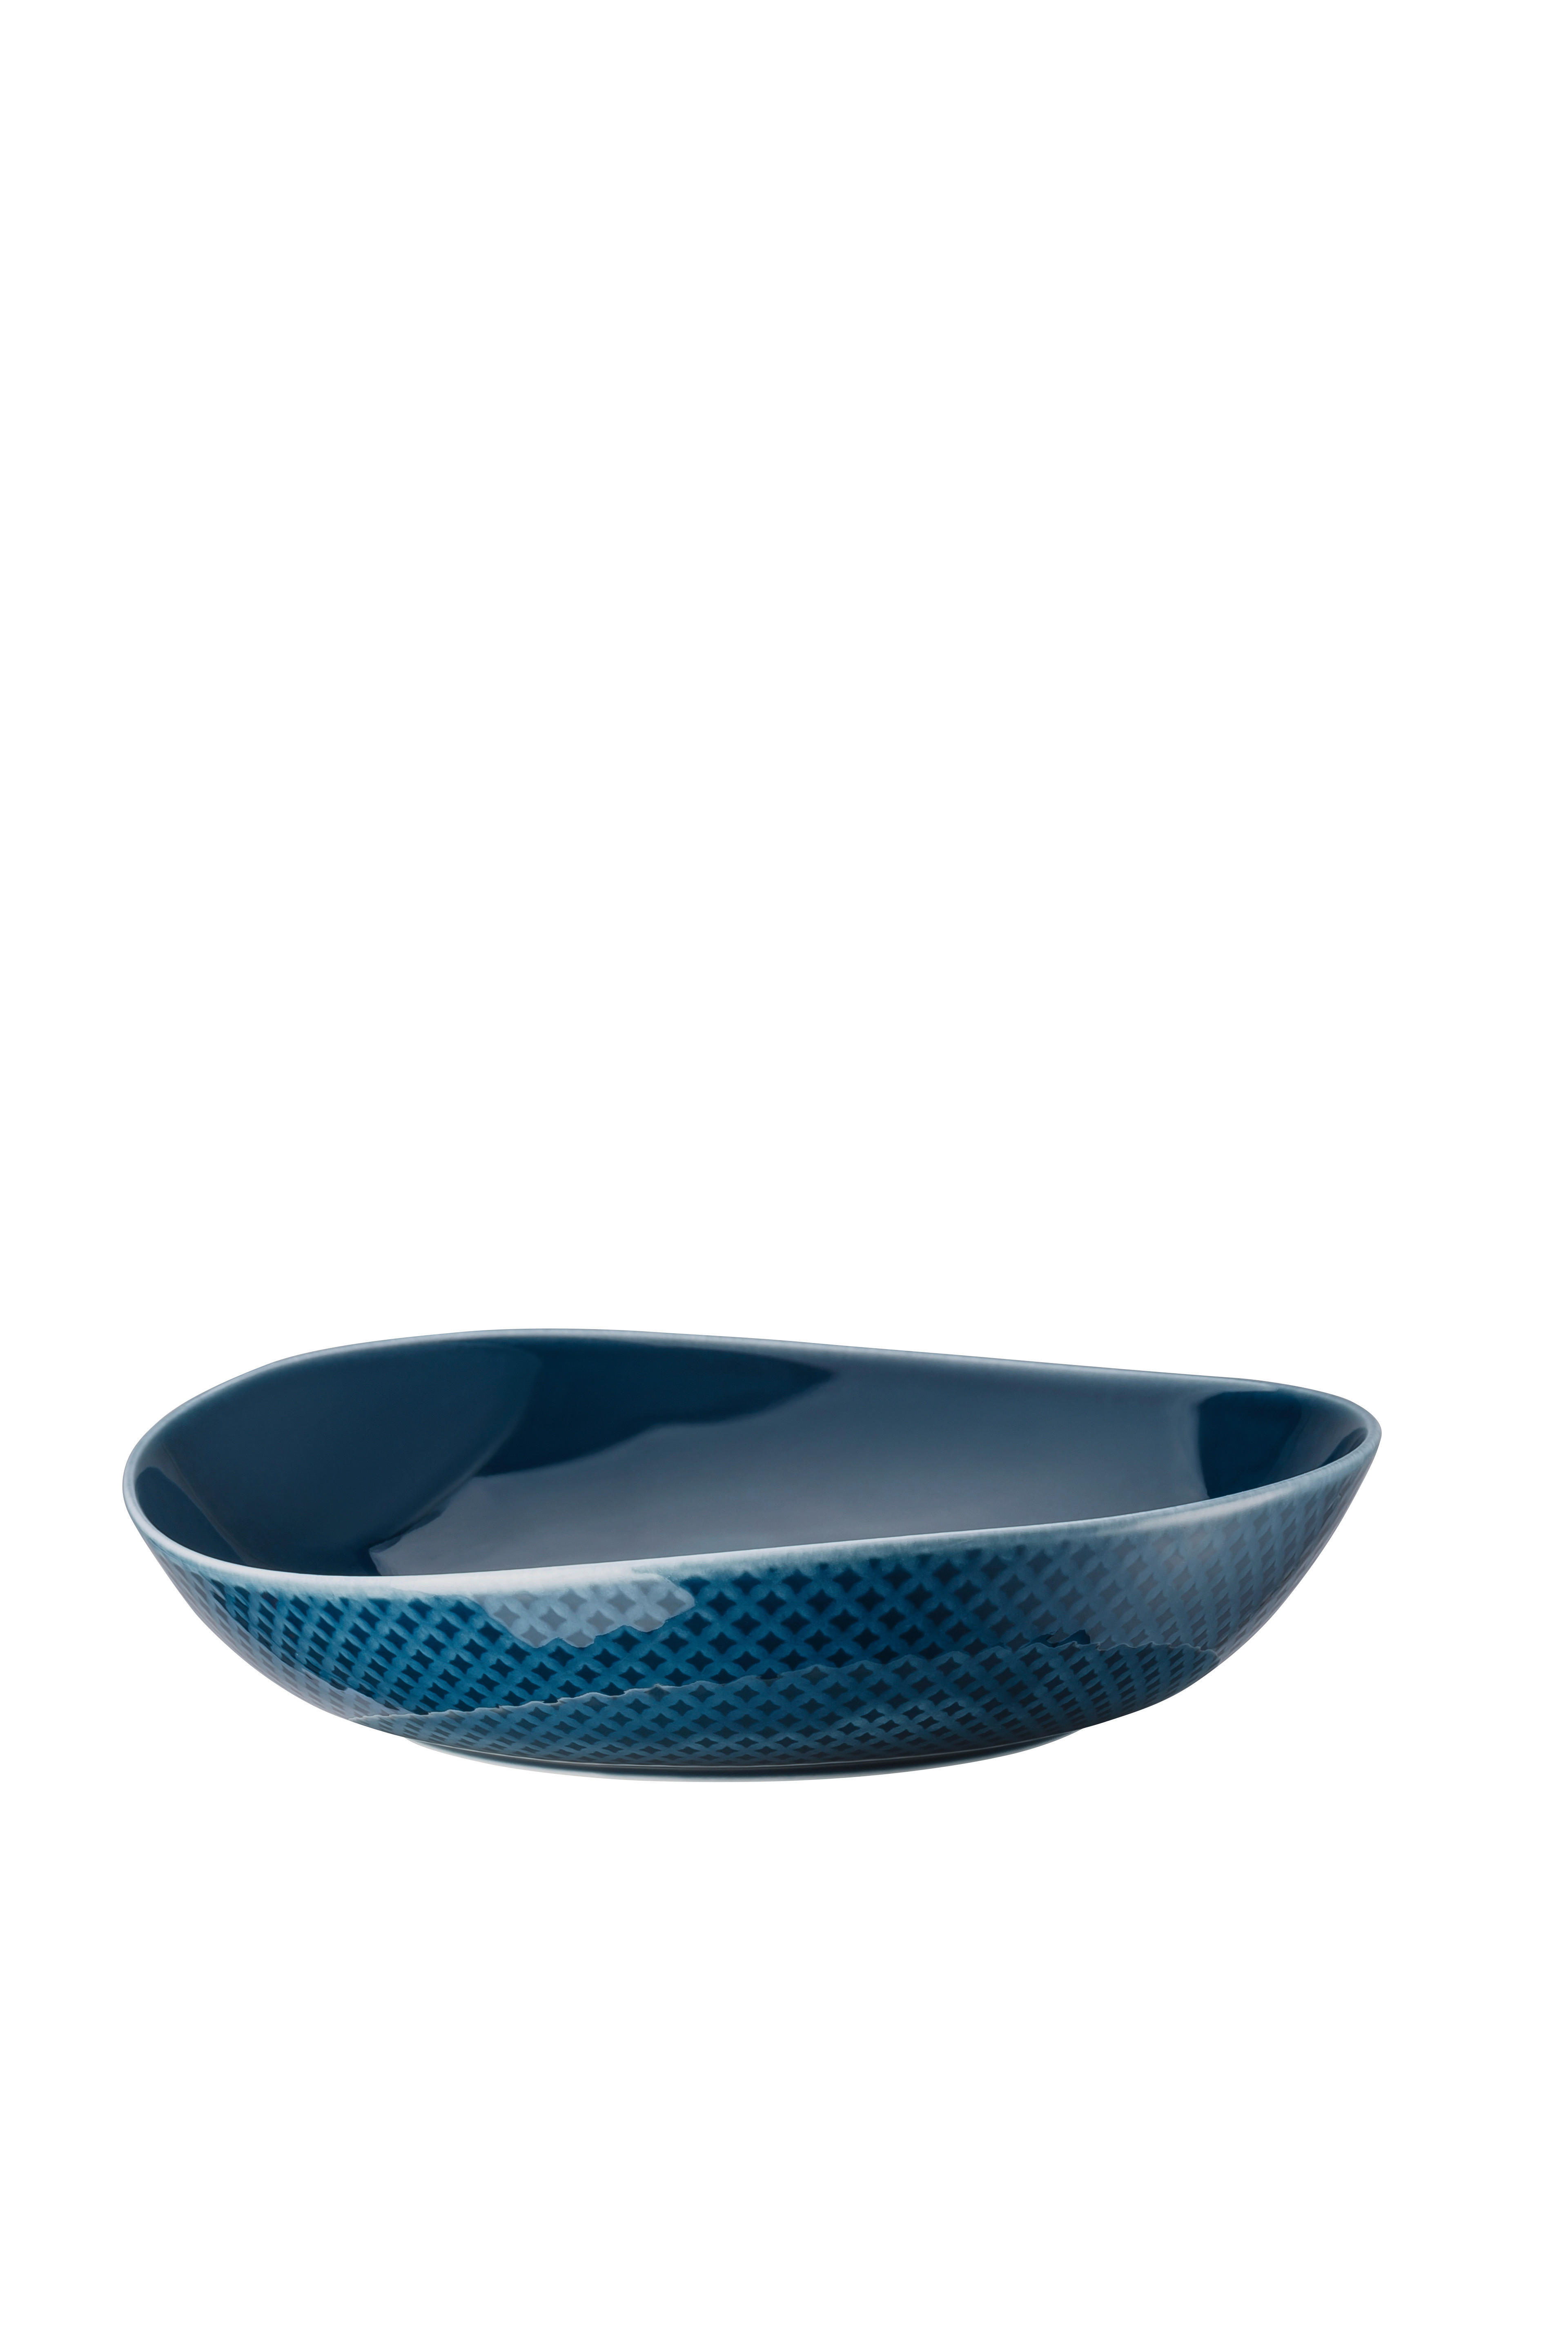 GLOBOKI KROŽNIK  JUNTO OCEAN BLUE  porcelan  - modra, Basics, keramika (25cm) - Rosenthal